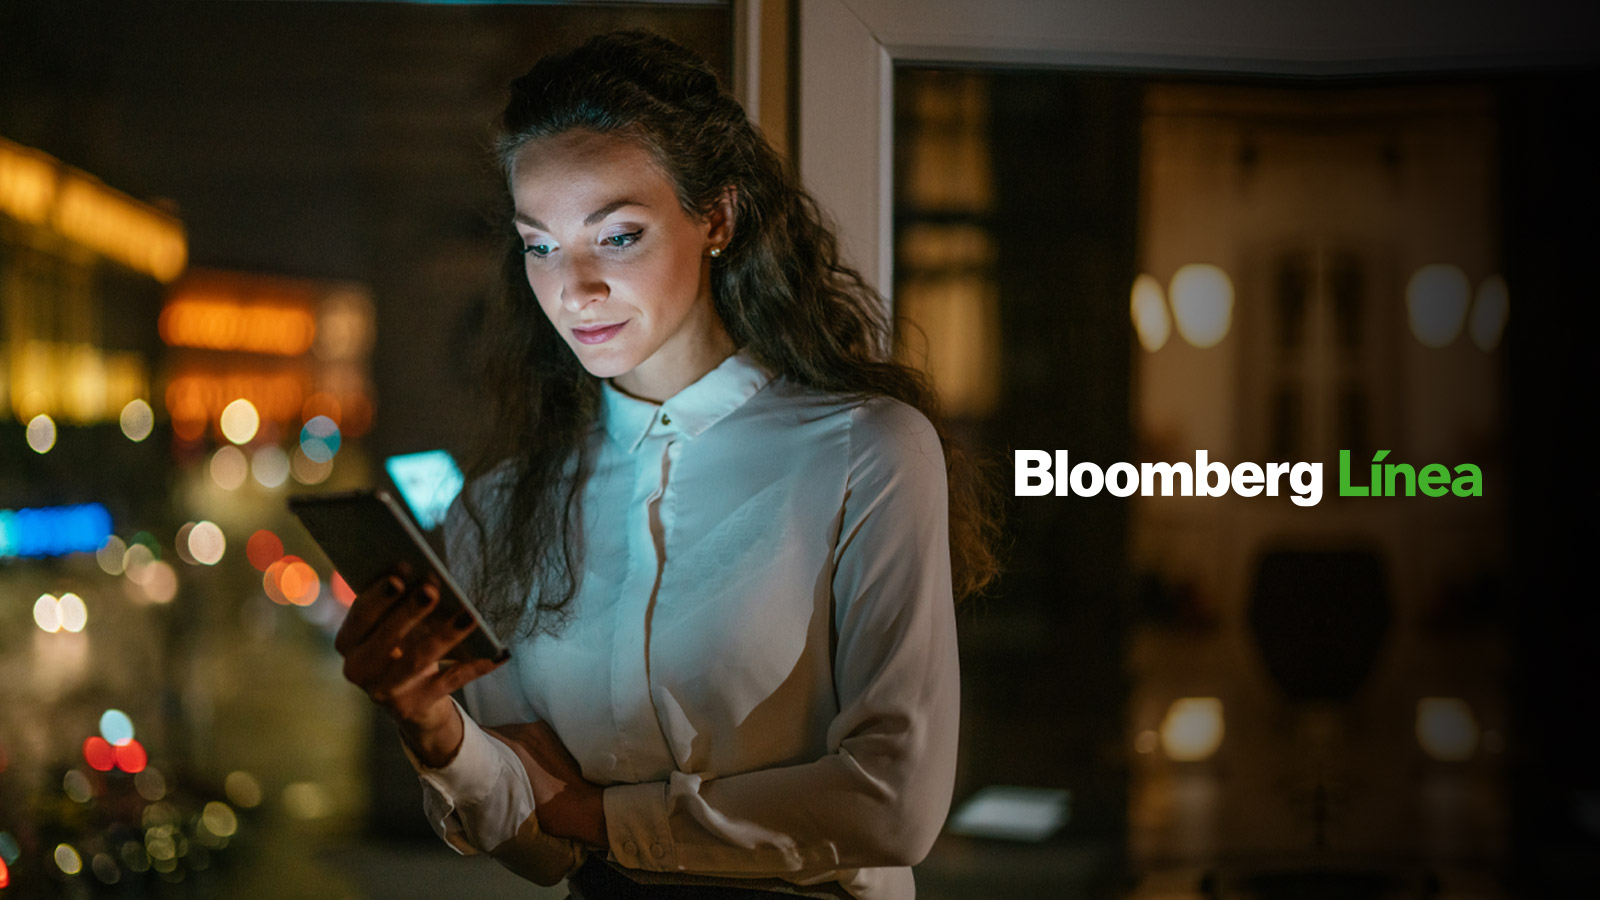 Mujer usando su celular con logo Bloomberg Línea